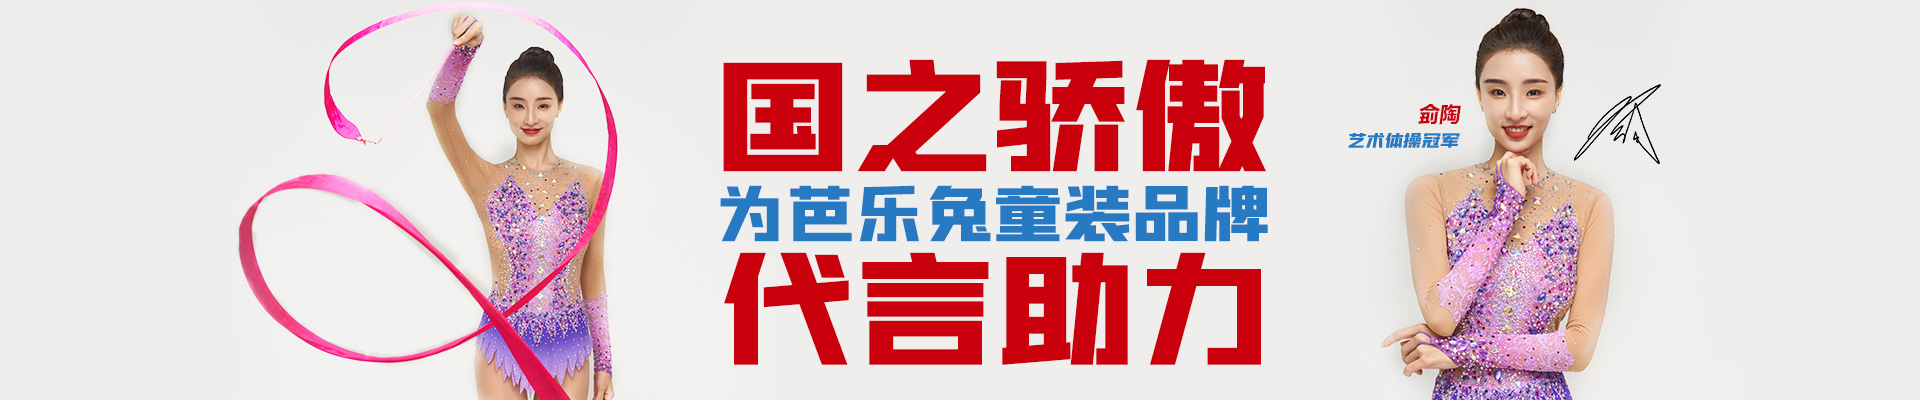 pc端新(xīn)聞中心banner